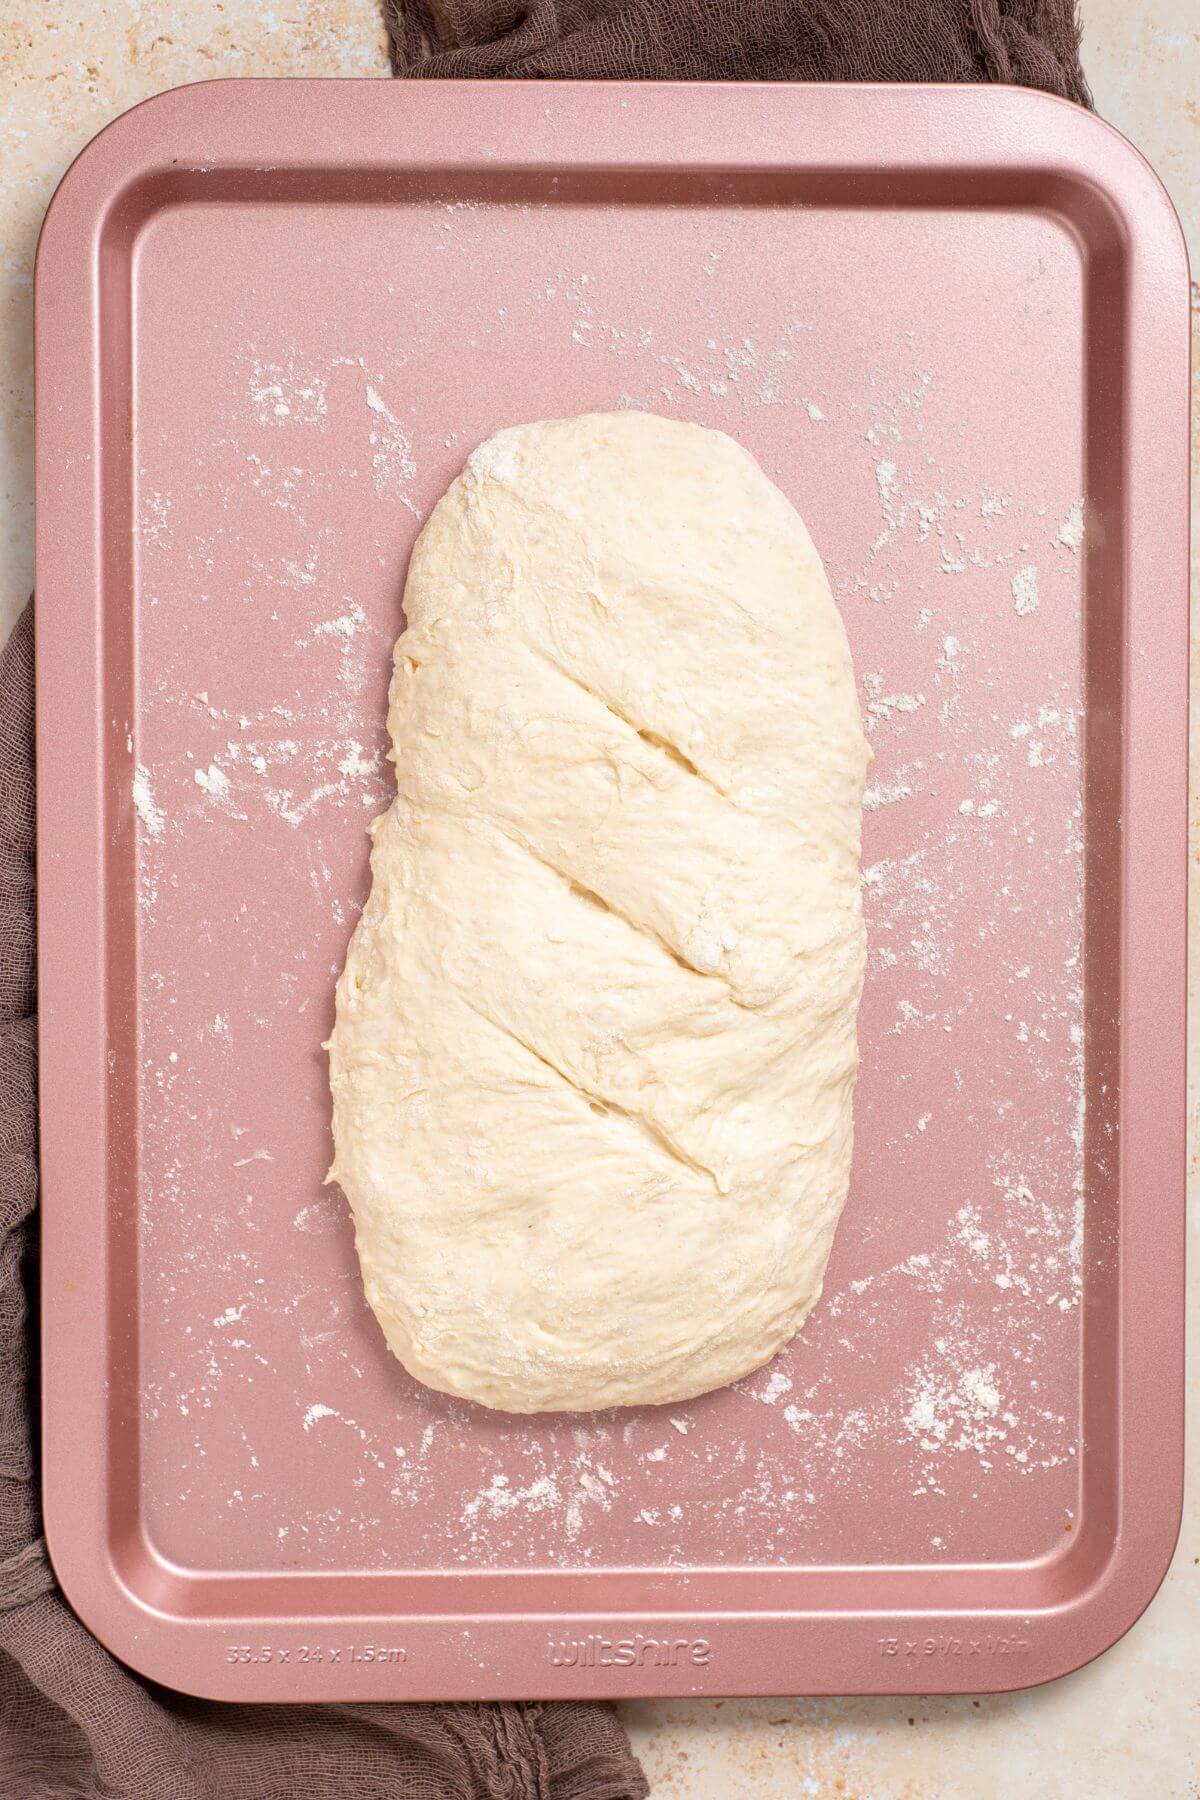 Risen dough shaped into loaf on floured baking sheet.